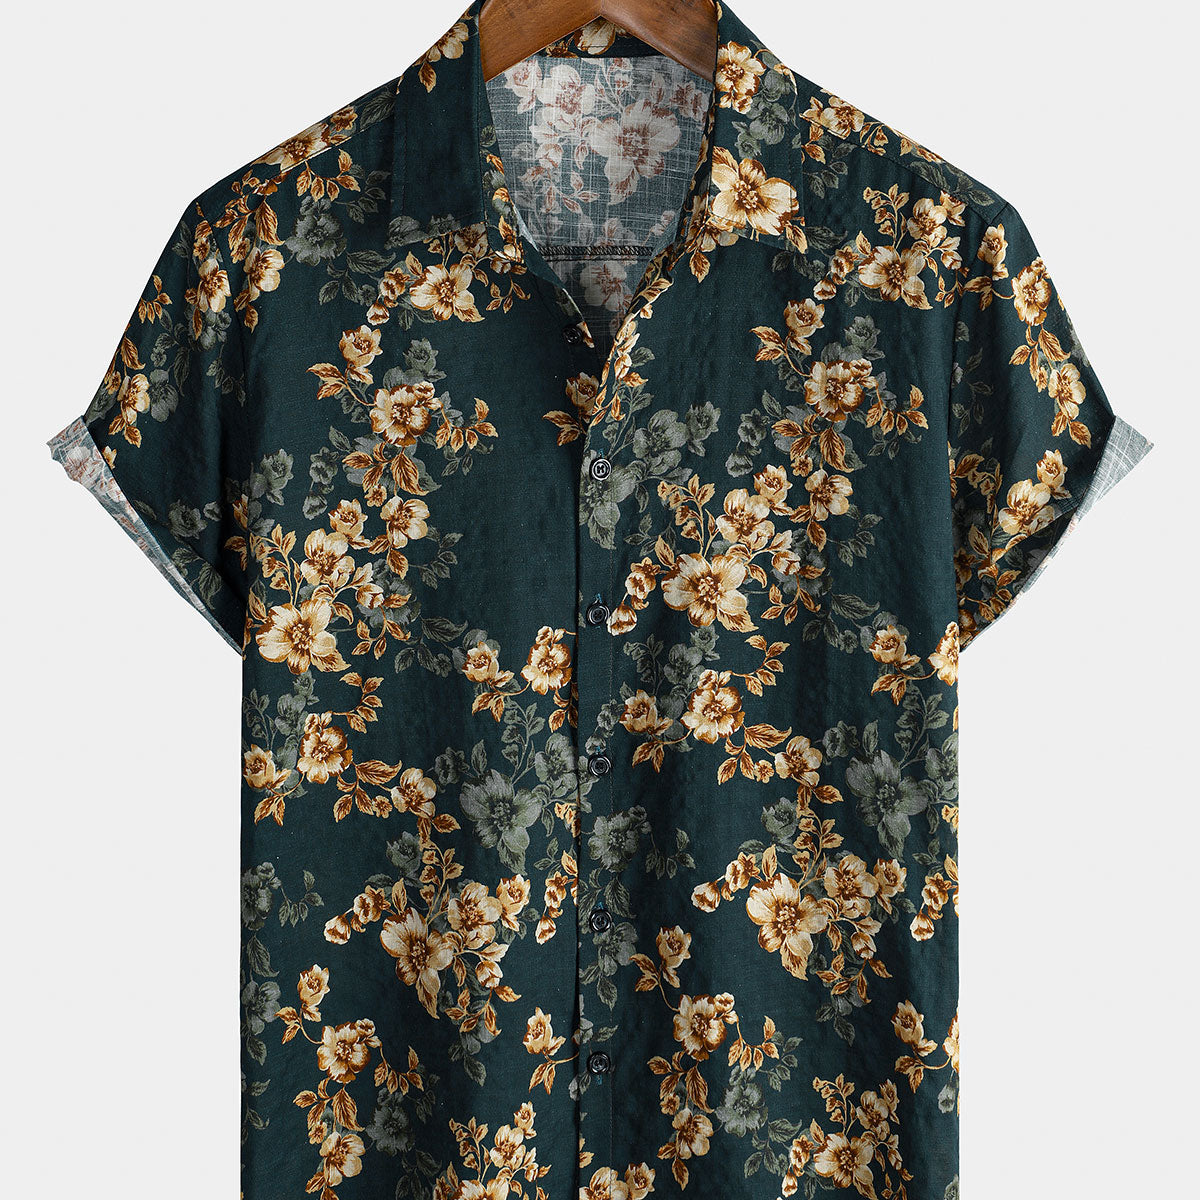 Men's Floral Print Retro Casual Beach Button Up Shirt